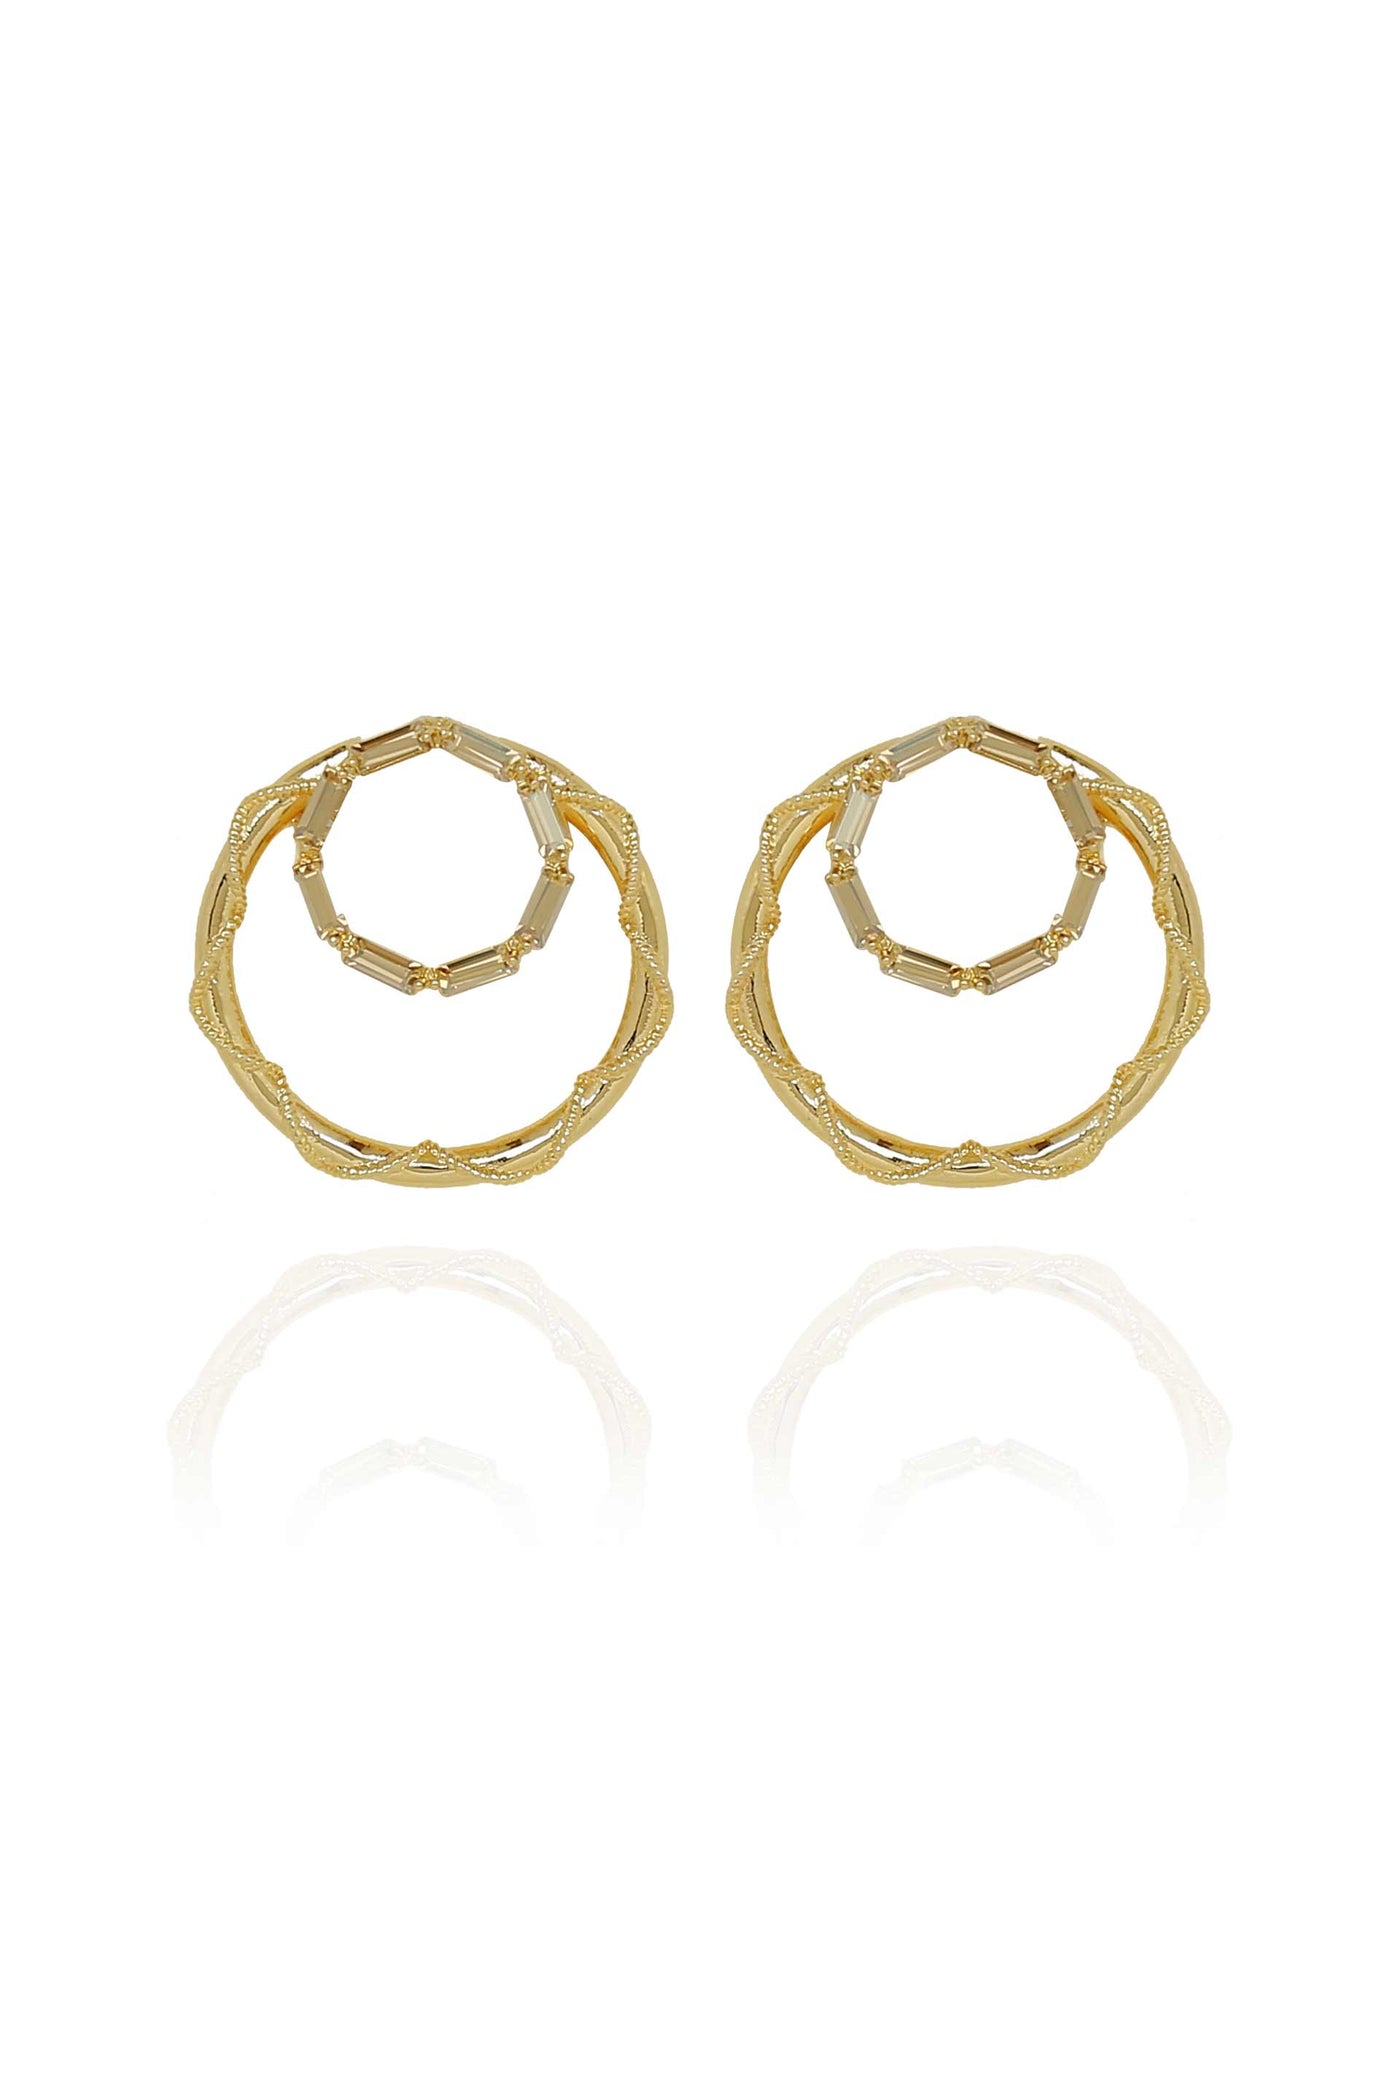 esme muriel earrings gold in yellow fashion jewellery indian designer wear online shopping melange singapore